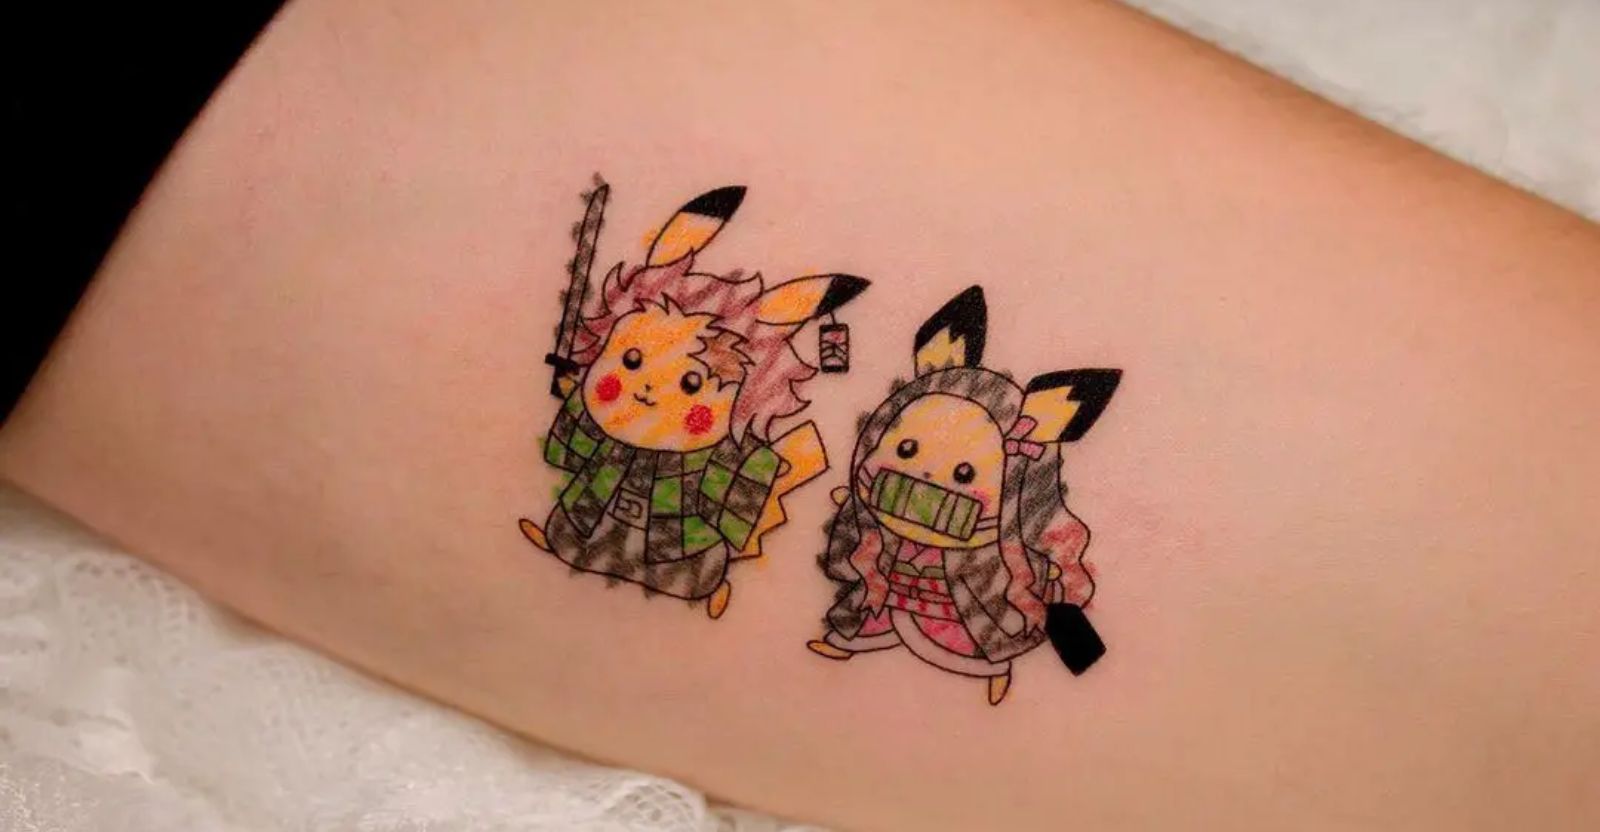 Pikachu tattoo by himeLILt on DeviantArt